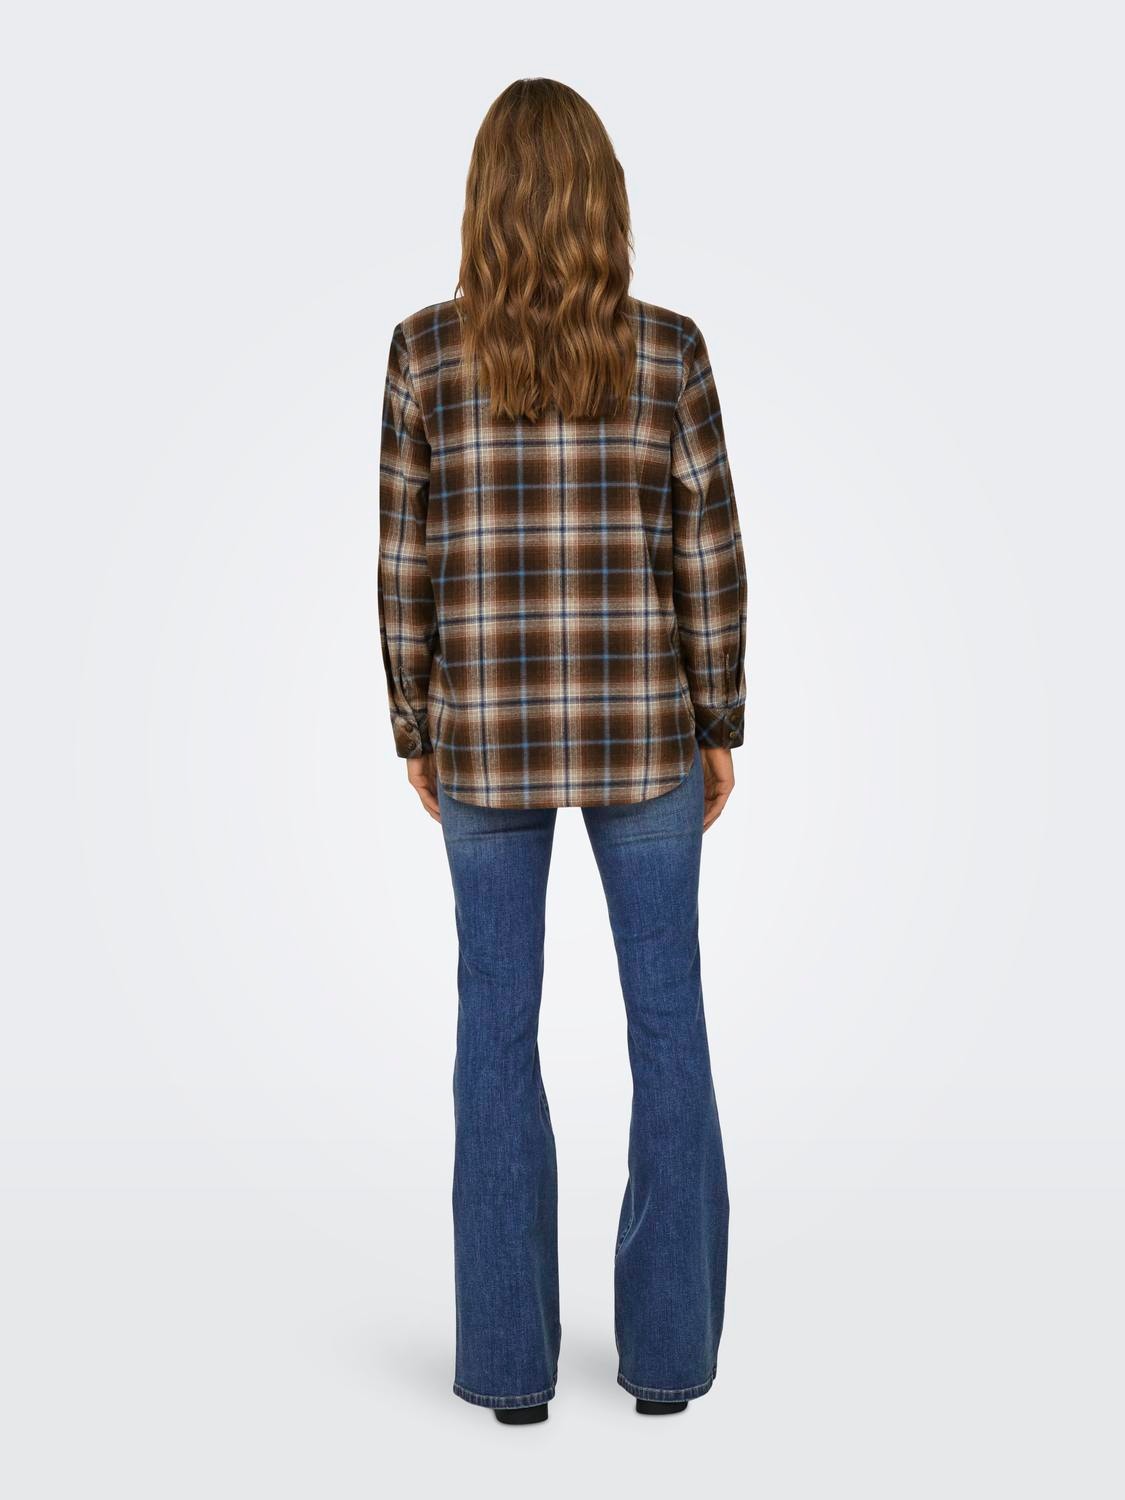 ONLY Checkered shirt -Shopping Bag - 15328831